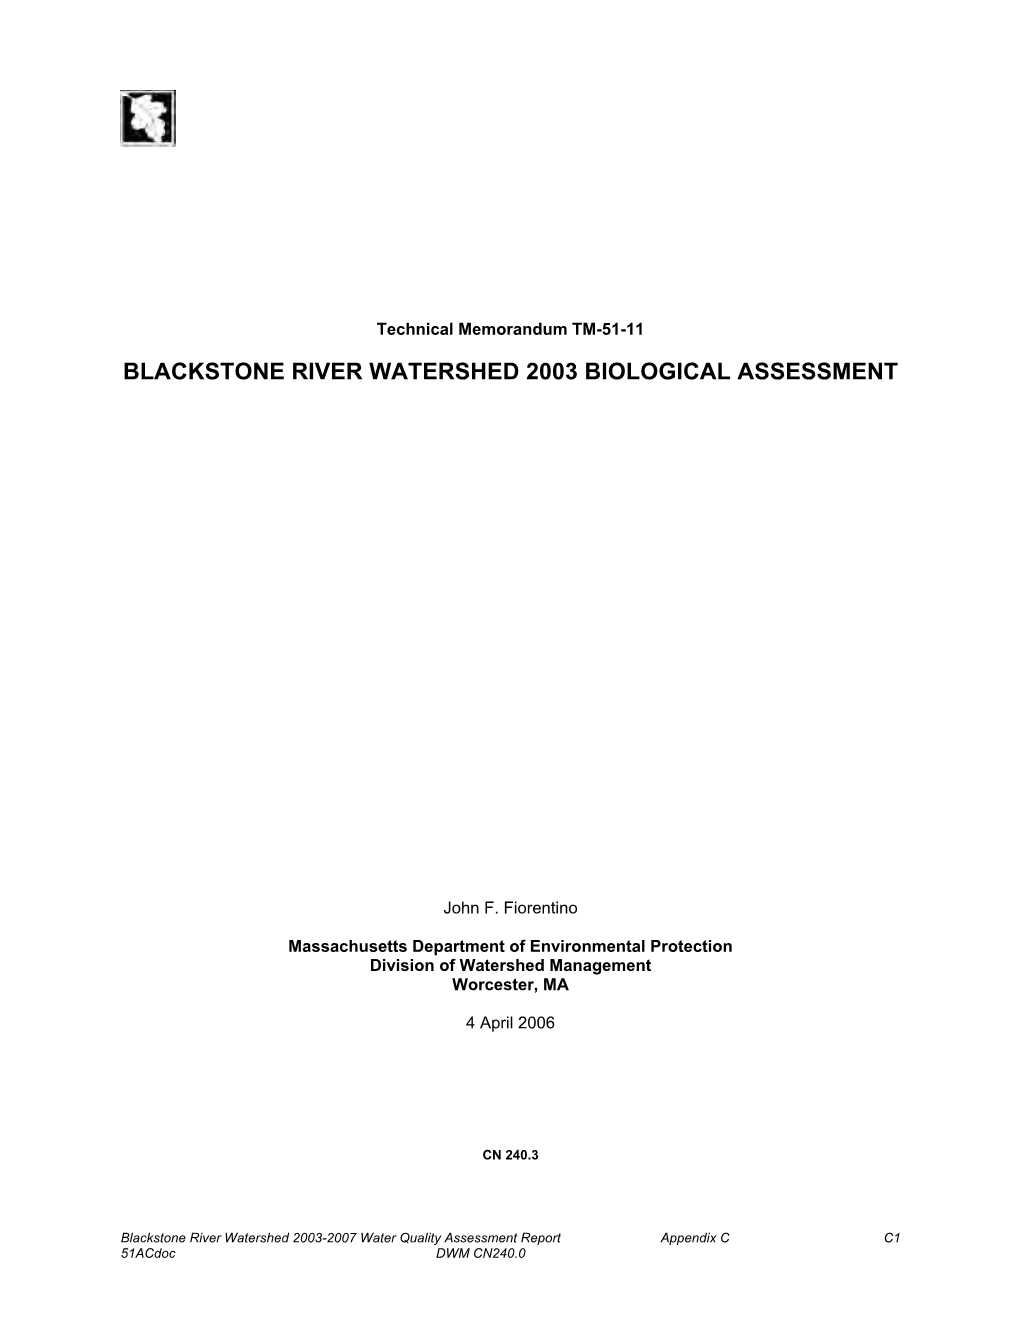 Blackstone River Watershed 2003 Biological Assessment